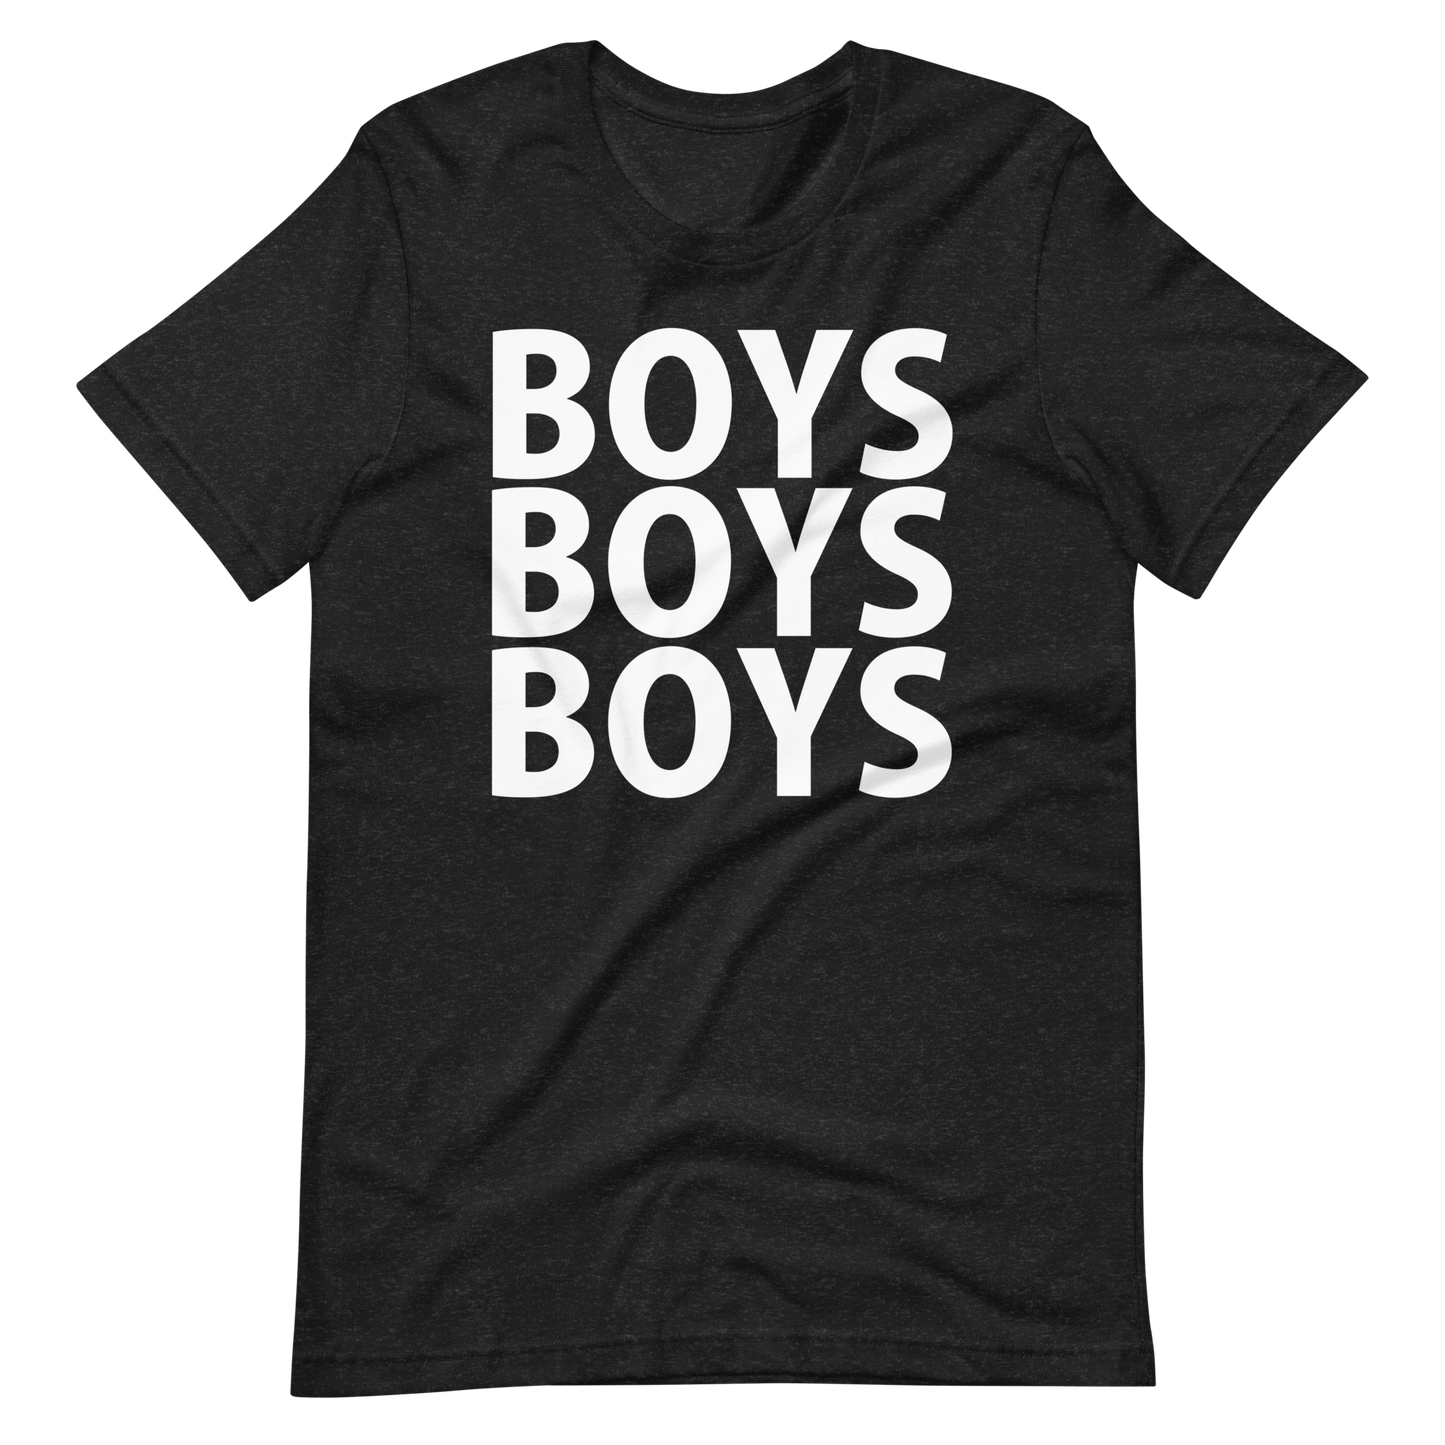 Boys Boys Boys T-Shirt - Black Heather